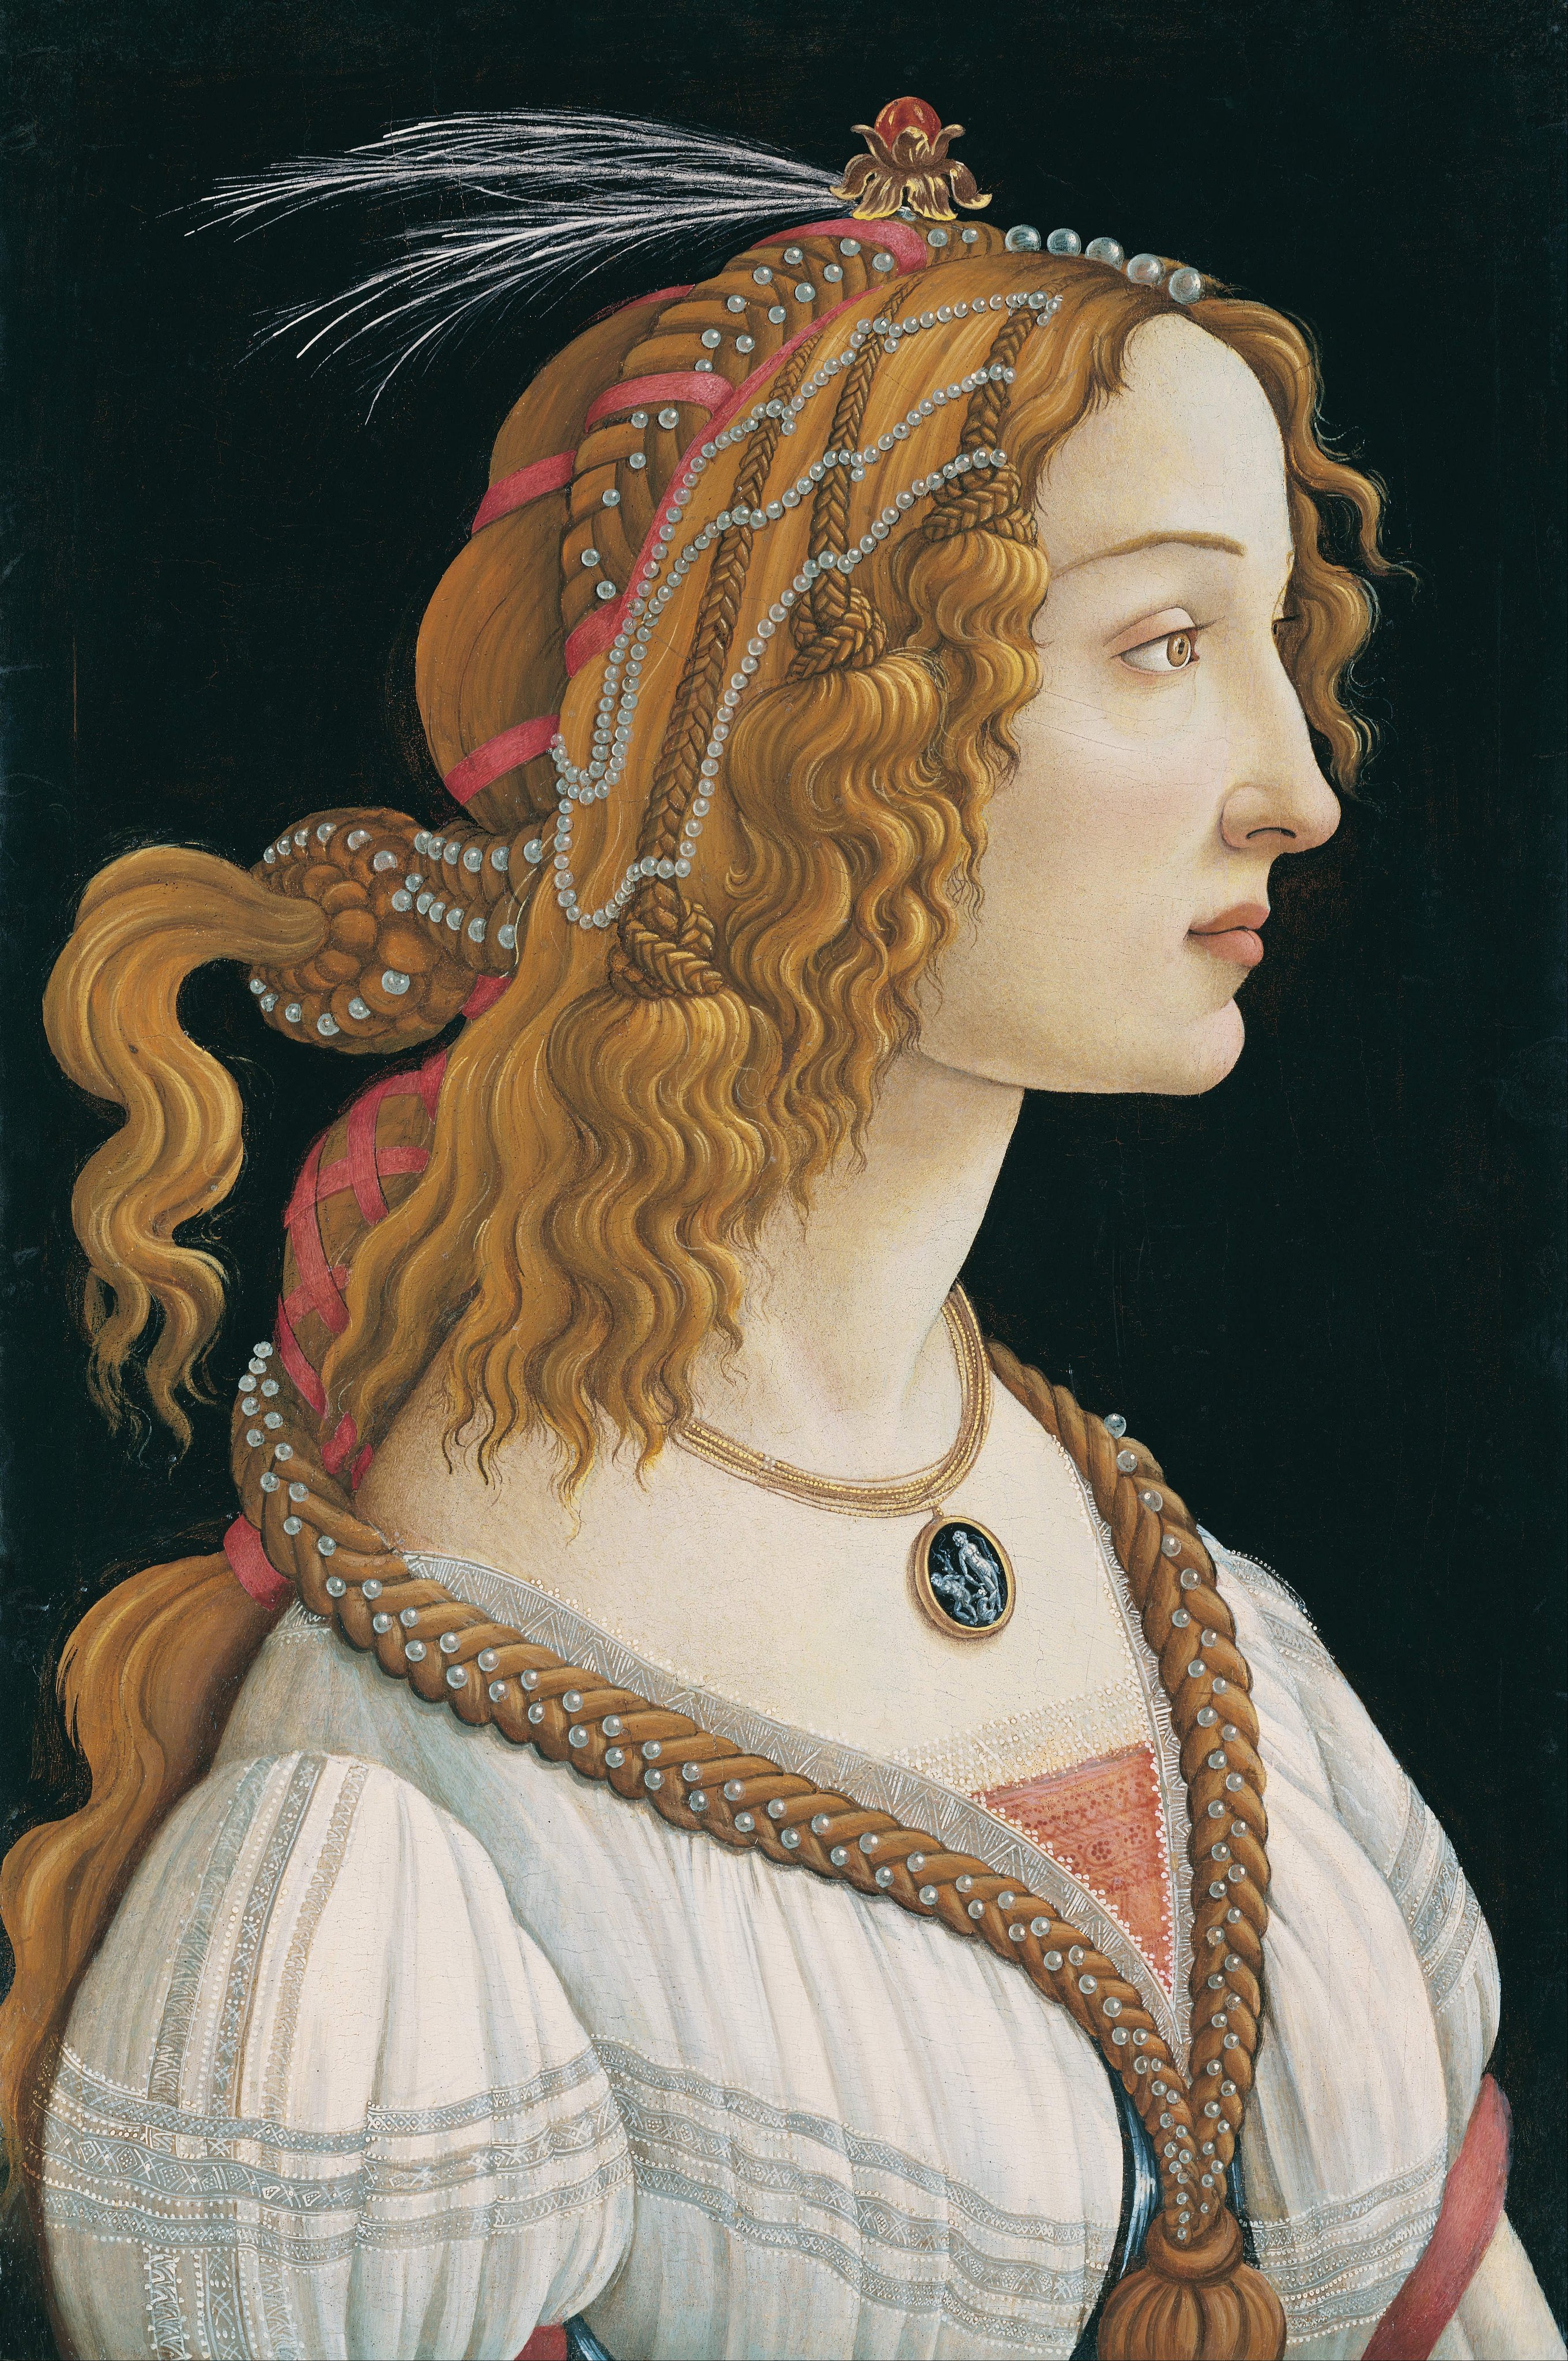 Facts About Sandro Botticelli: Sandro Botticelli, Simonetta Vespucci as a Mythological Nymph, ca. 1480, Städel Museum, Frankfurt, Germany. Twitter.